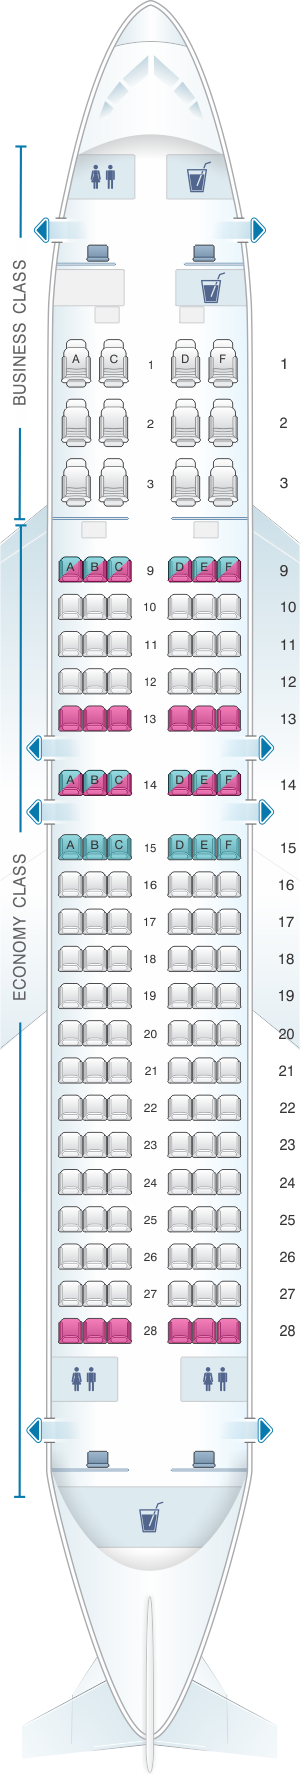 Seat map for Qatar Airways Airbus A320 200 132pax